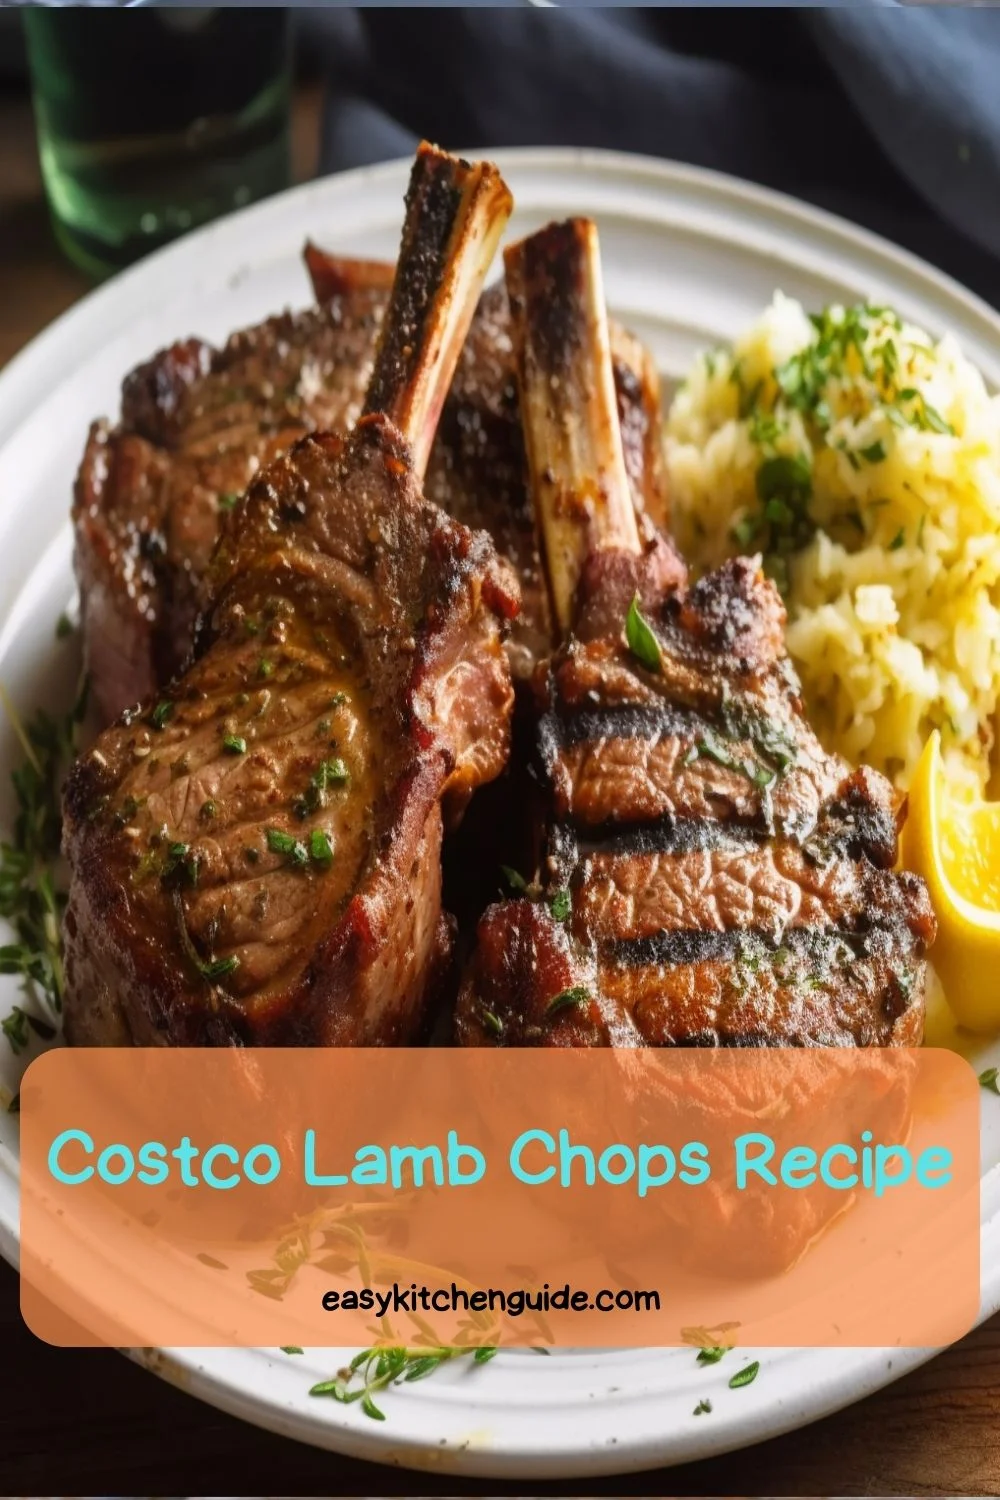 Costco Lamb Chops Recipe